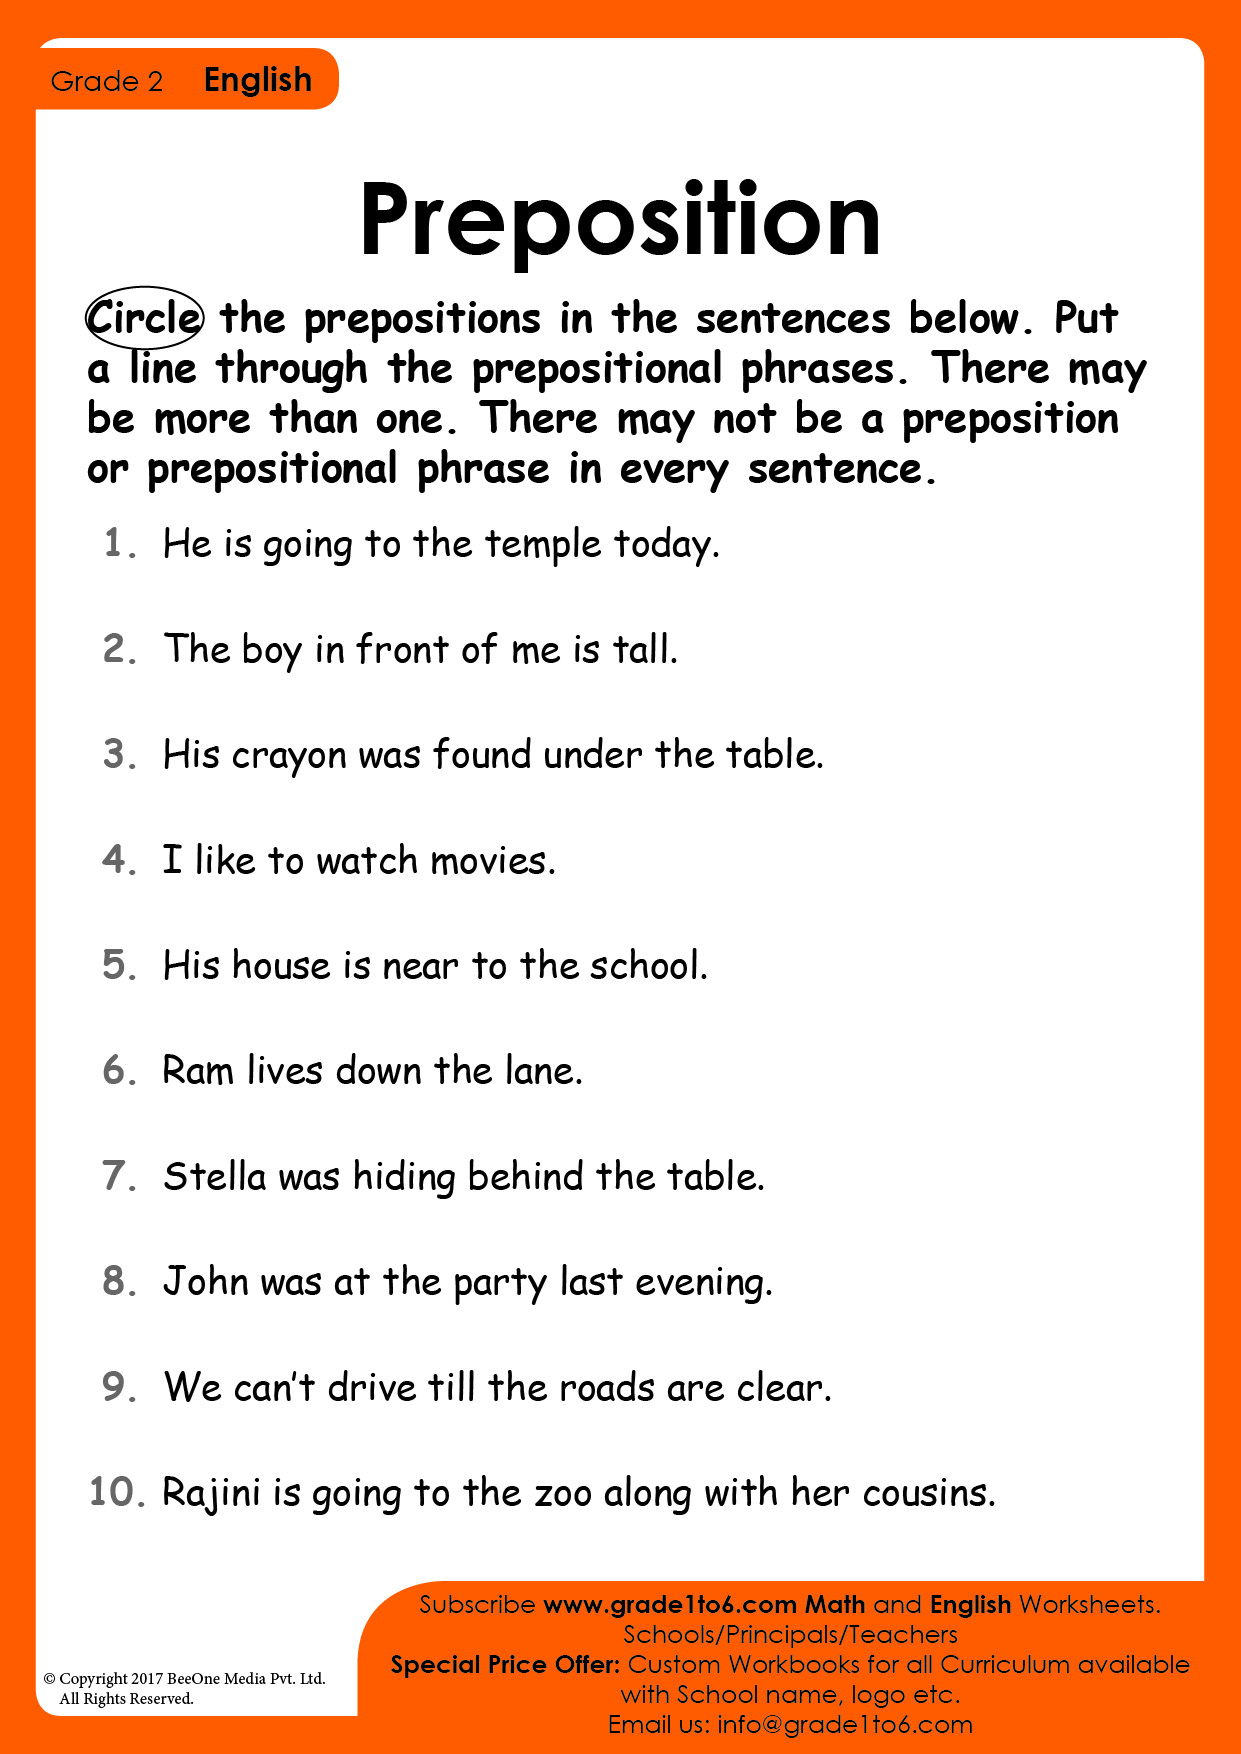 Preposition Worksheets Grade1to6 com